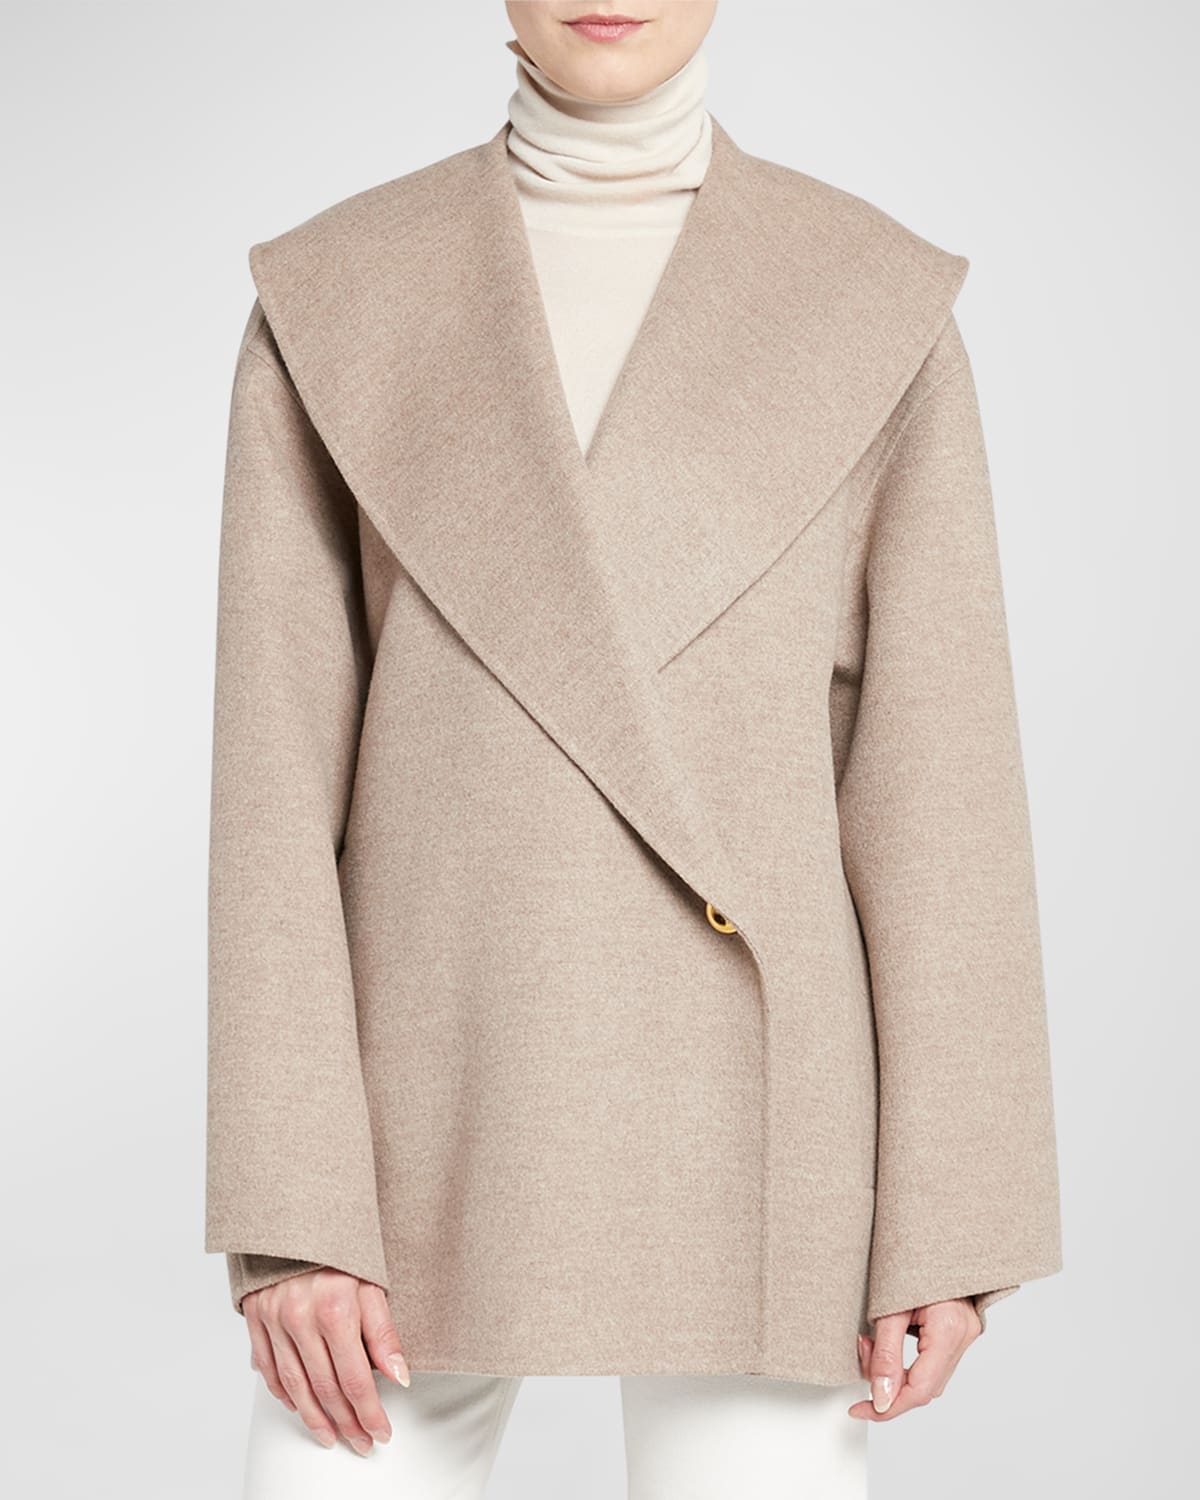 Oversize Cashmere Top Coat